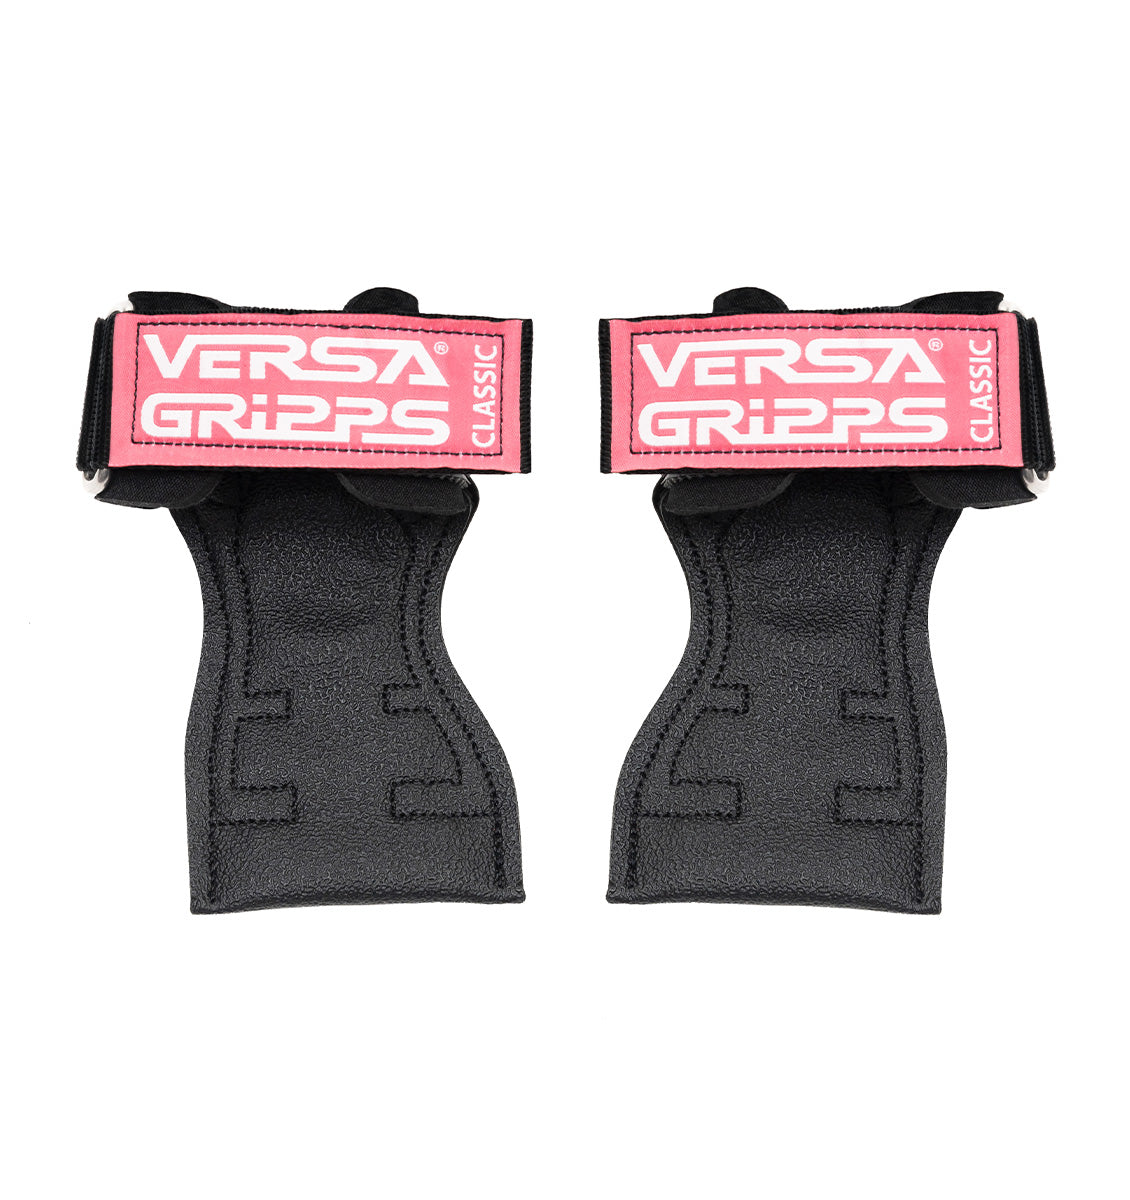 Versa Gripps® CLASSIC Series Lifting Straps - Pink - 6